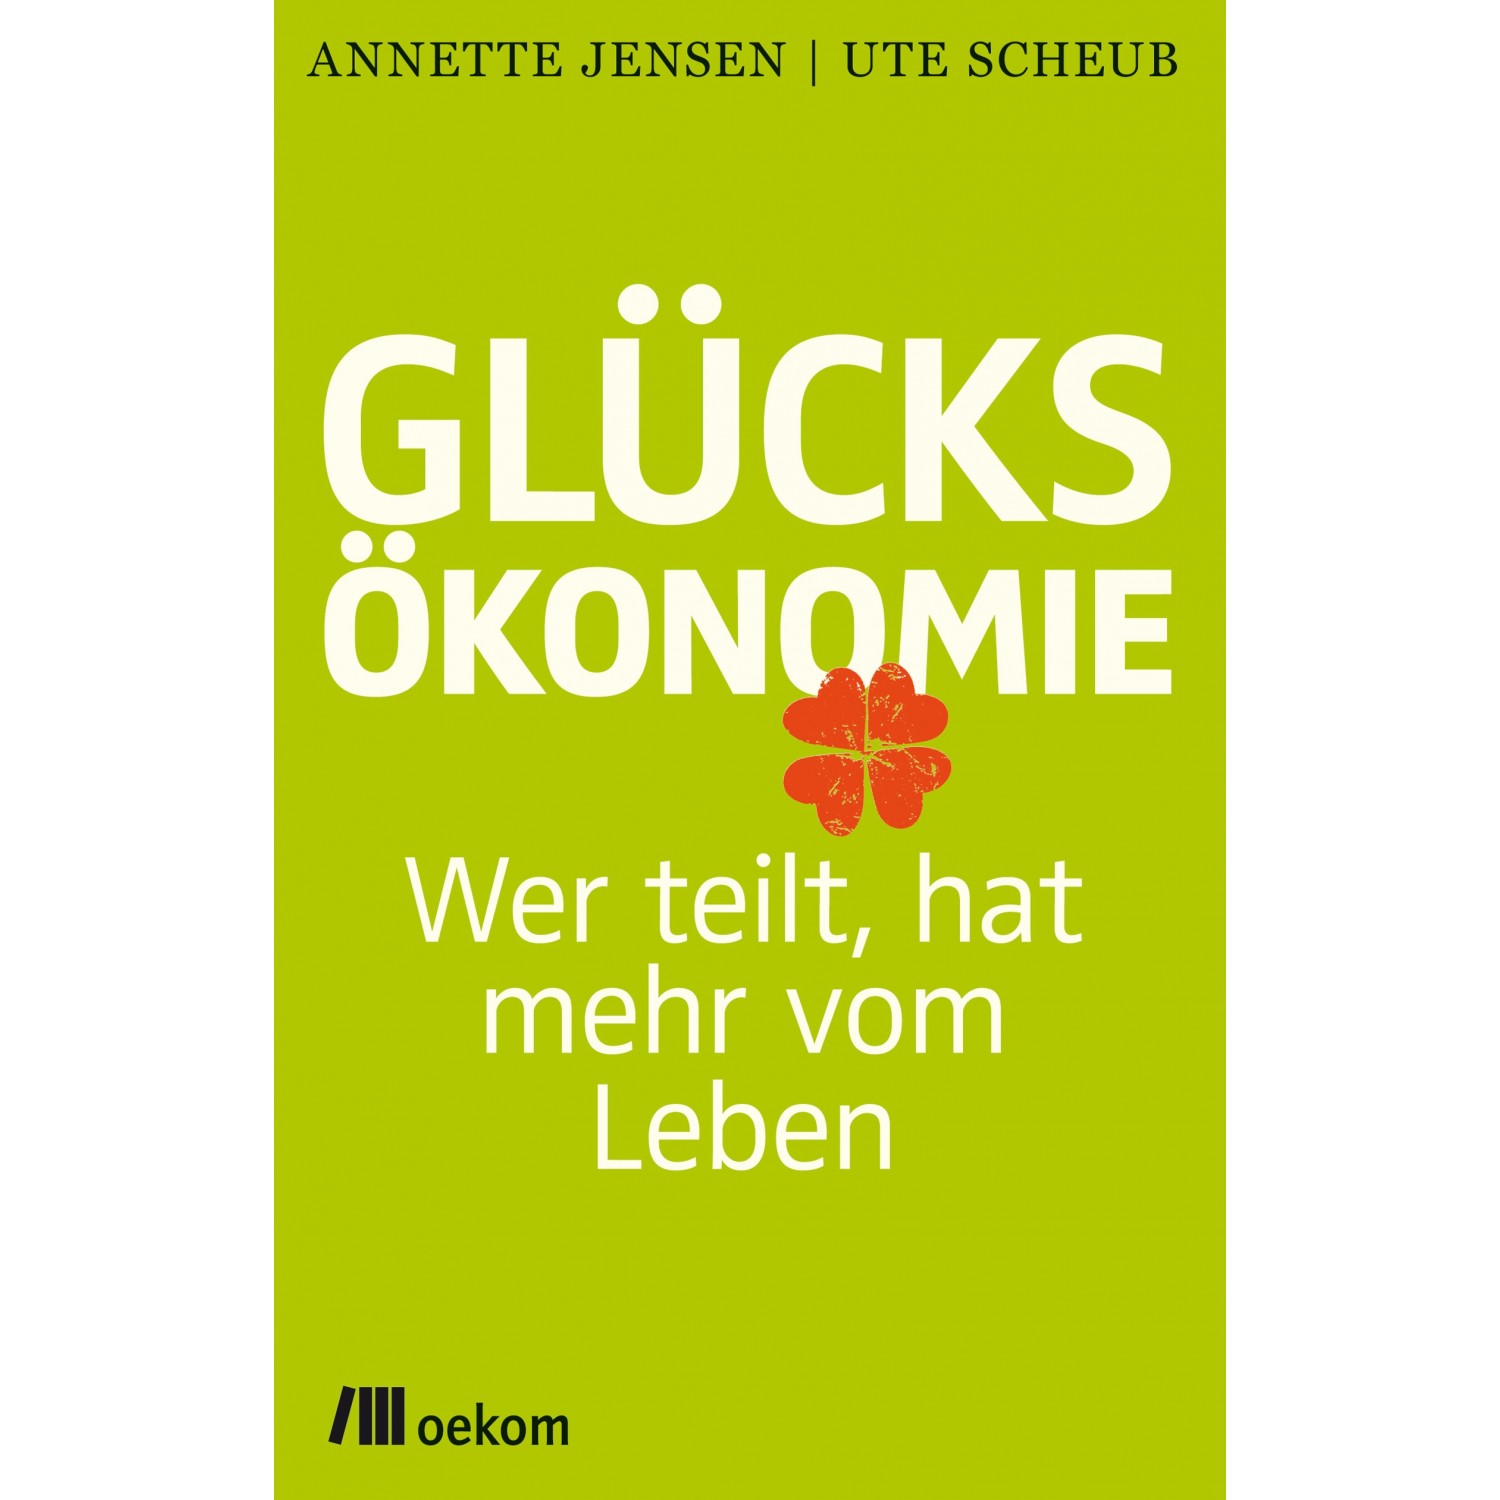 Gluecksoekonomie - A. Jensen & U. Scheub | oekom publisher